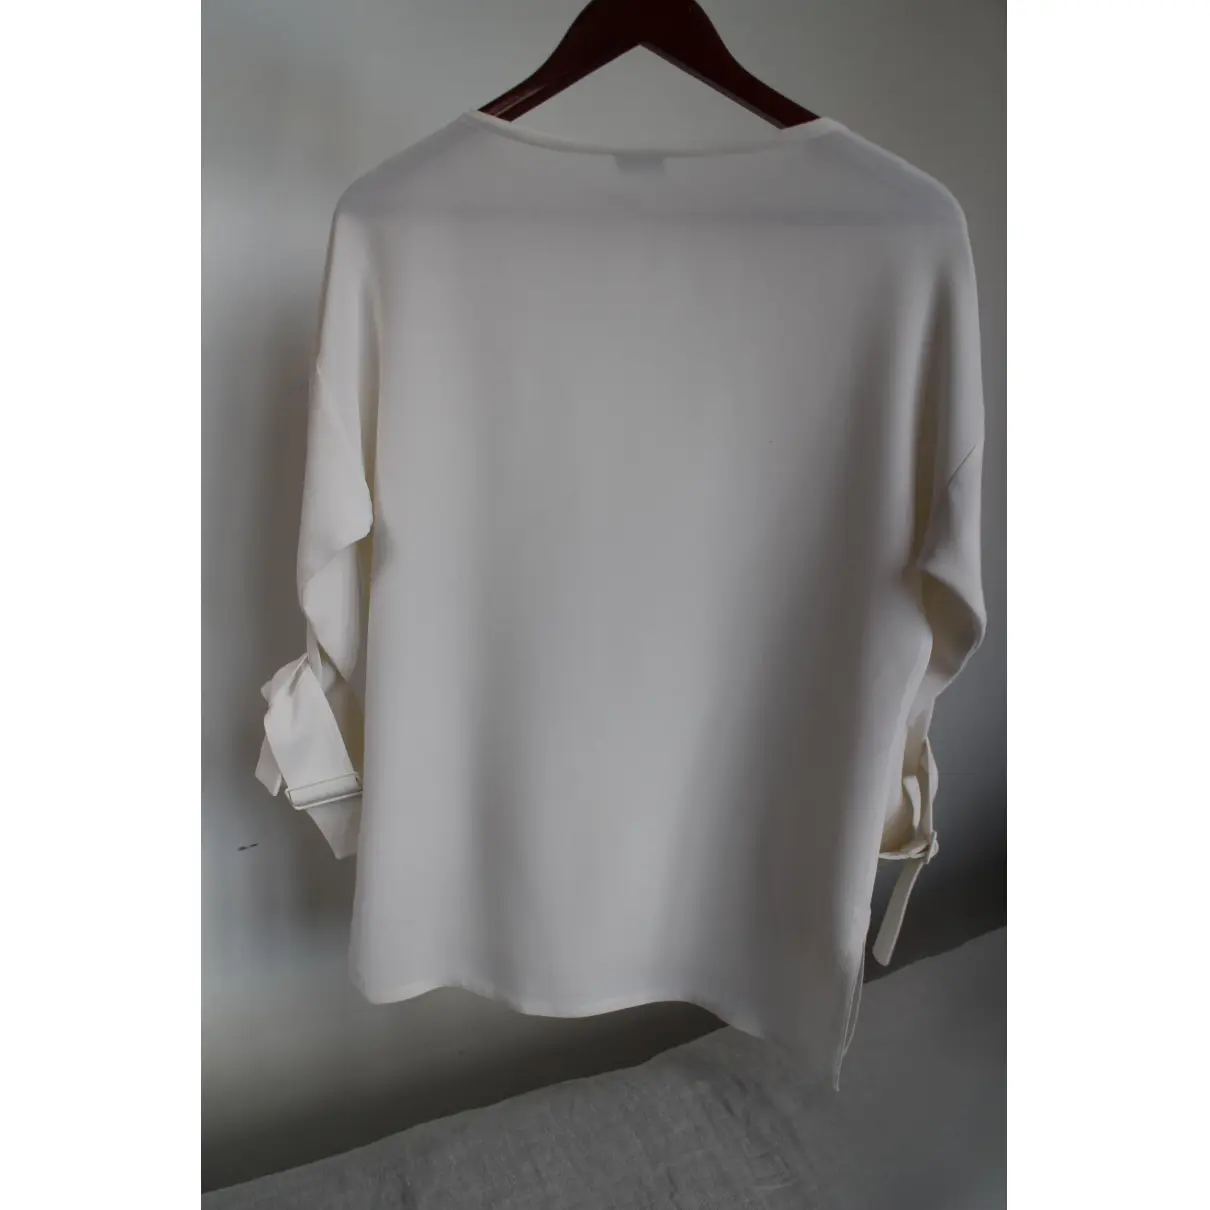 Buy Joseph Silk blouse online